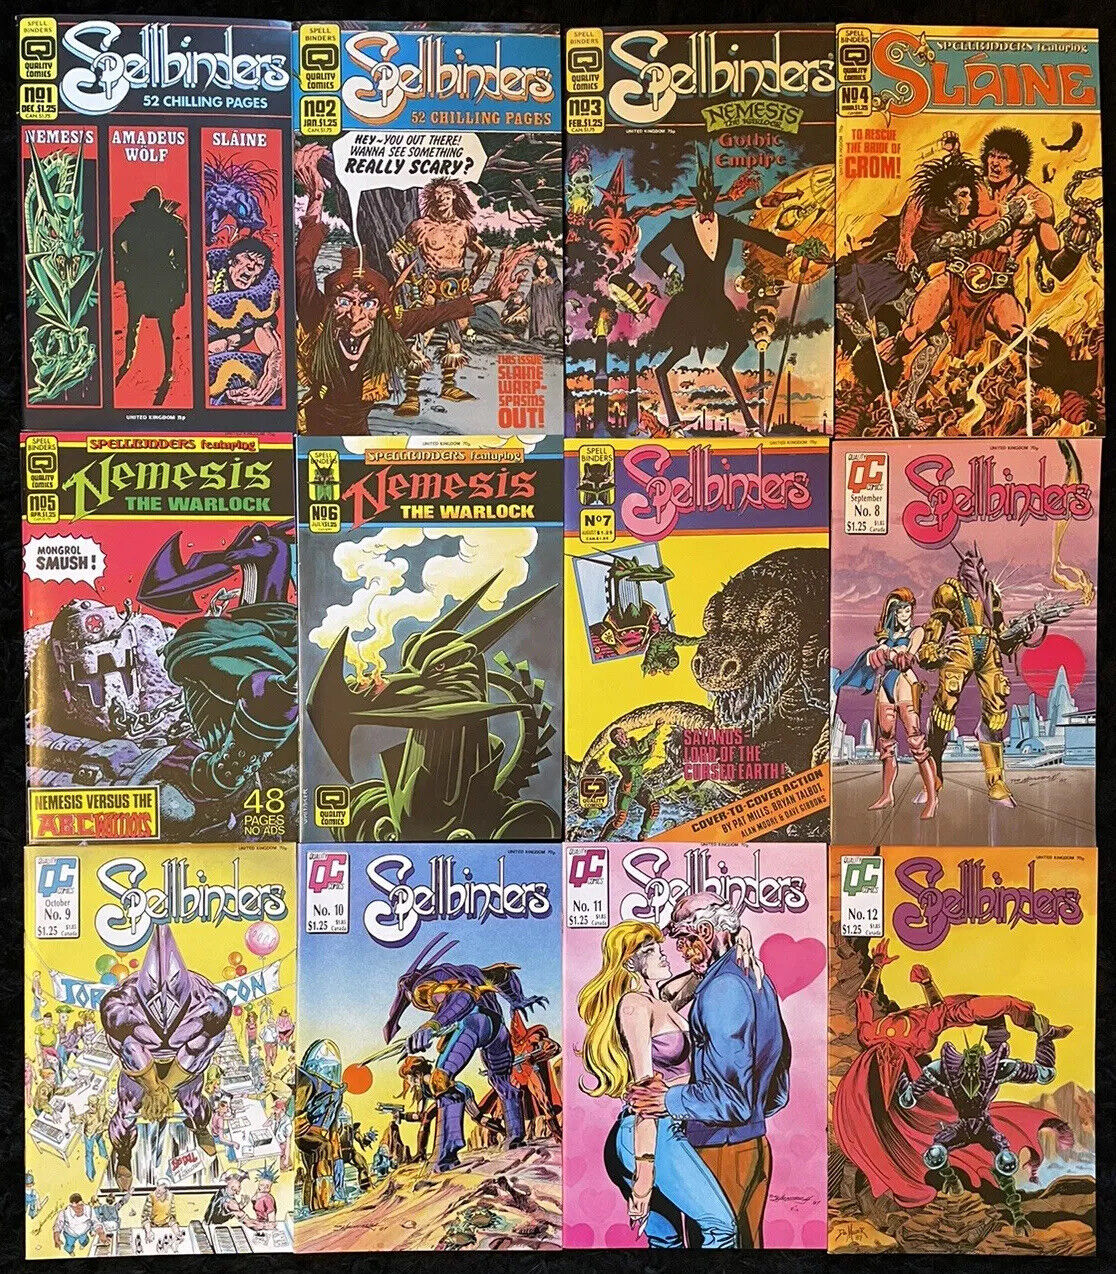 Spellbinders #1-12 COMPLETE SET - 1986 Quality Comics - Nemesis - Slaine - NM